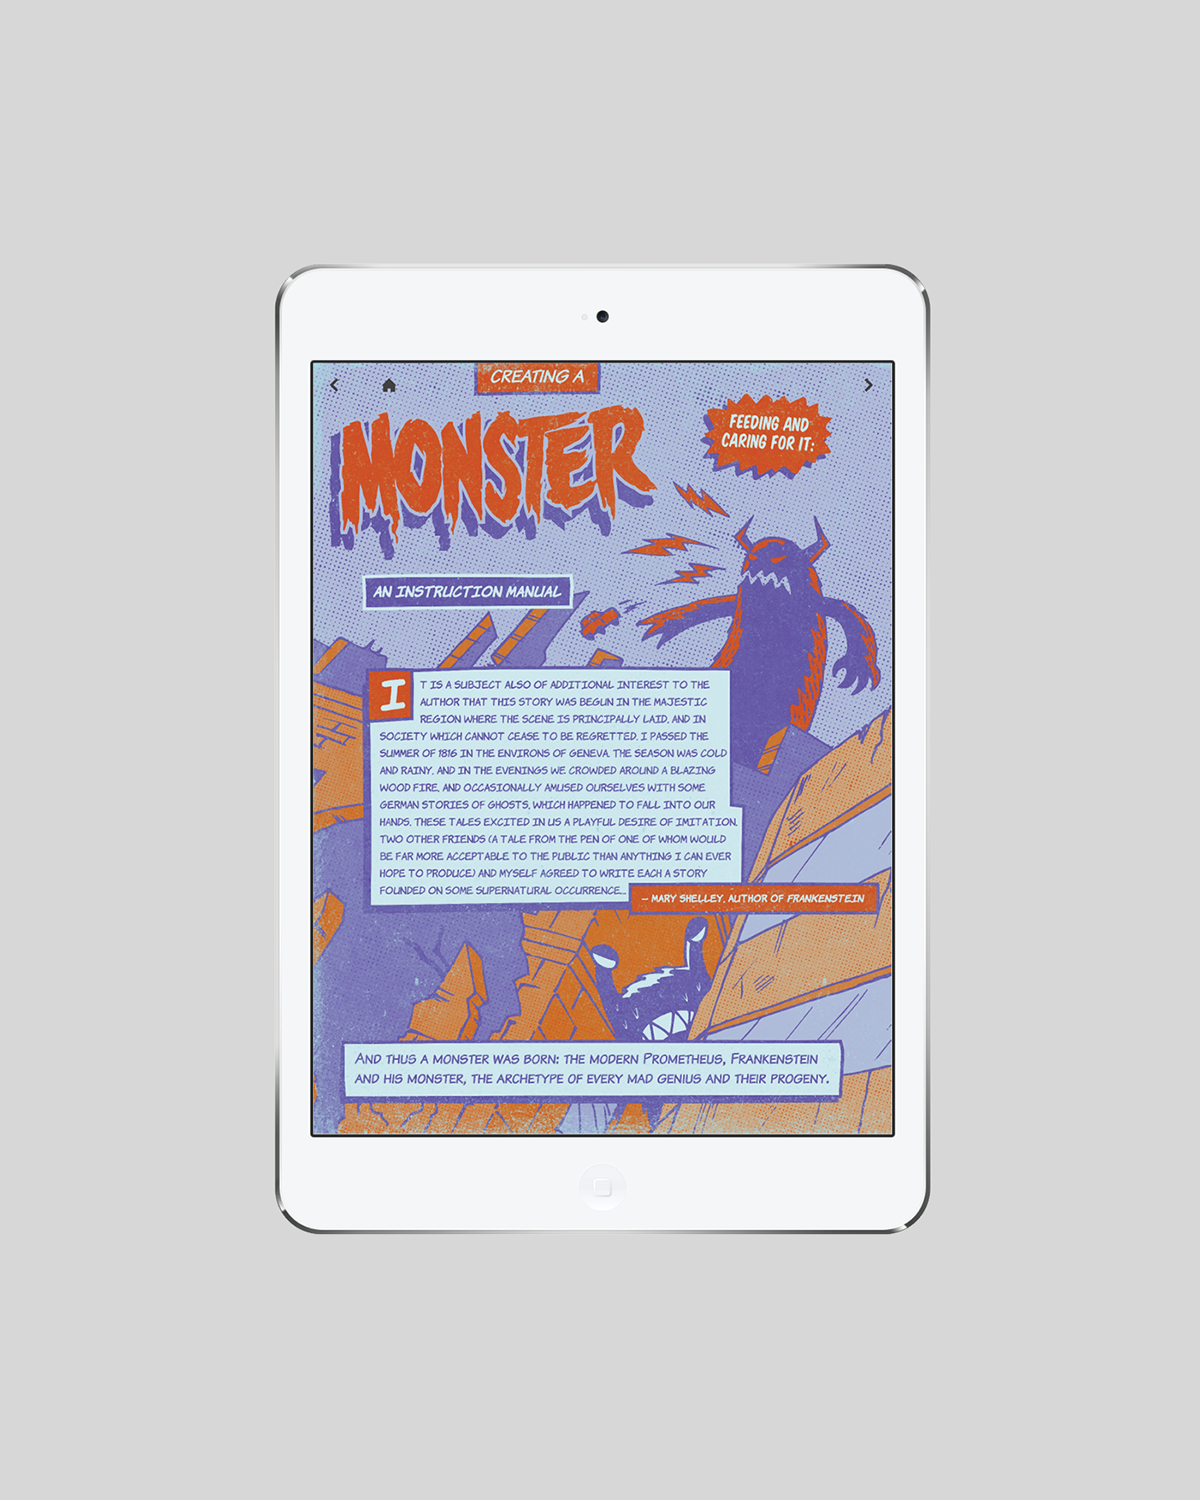 threaded magazine ed16 issue creating a monster iPad interactive counterspace pie paper spielerei david merritt letterproeftuin